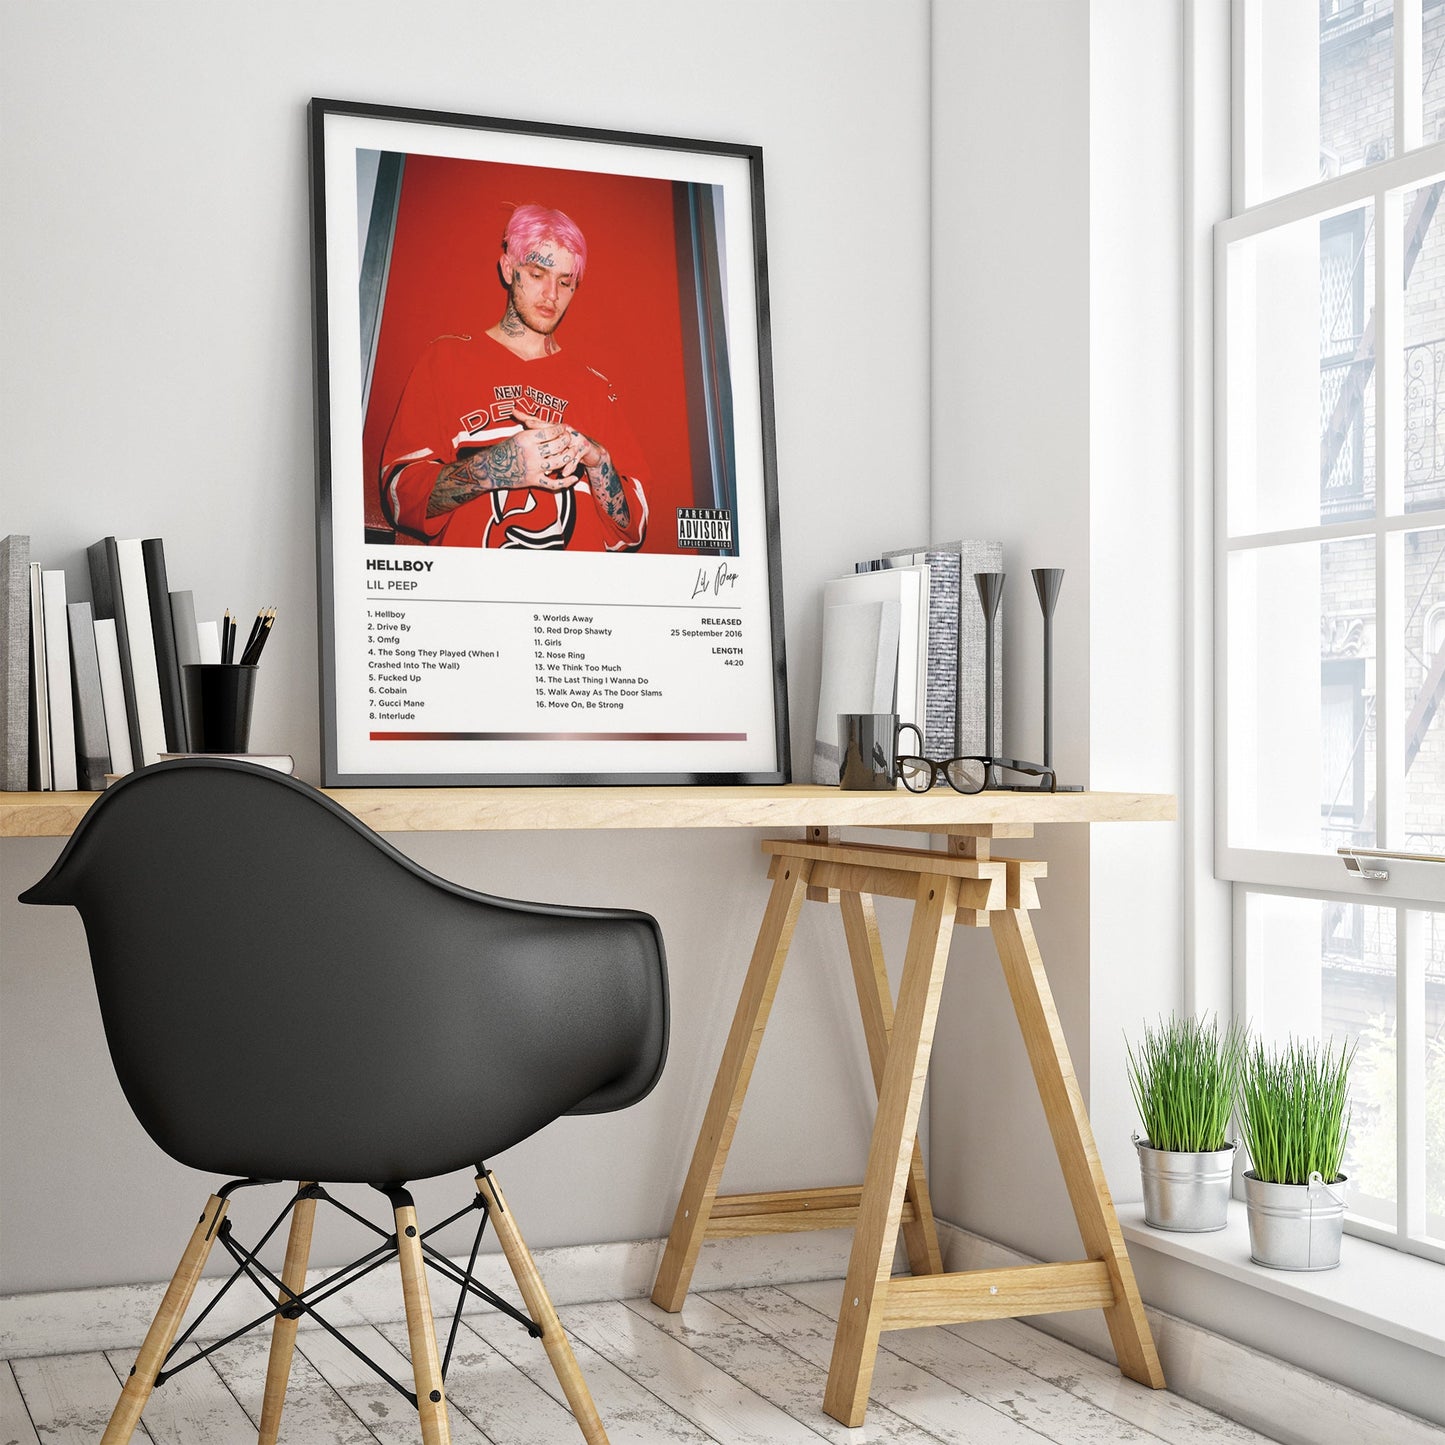 Lil Peep - Hellboy Framed Poster Print | Polaroid Style | Album Cover Artwork